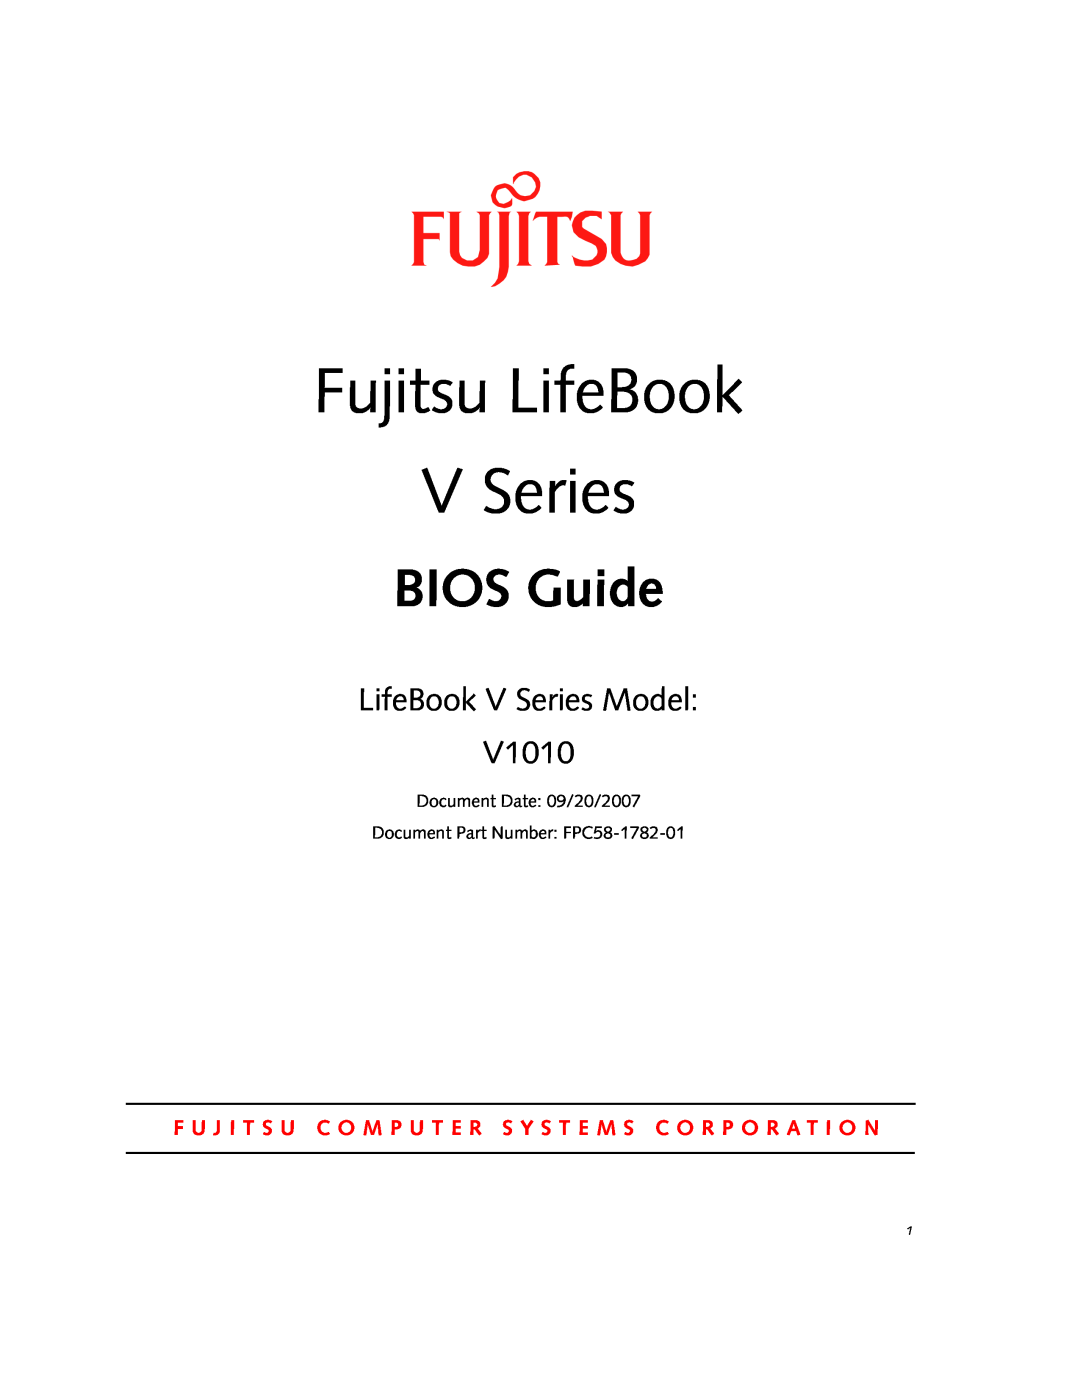 Fujitsu V1010 manual Fujitsu LifeBook V Series, BIOS Guide, LifeBook V Series Model 